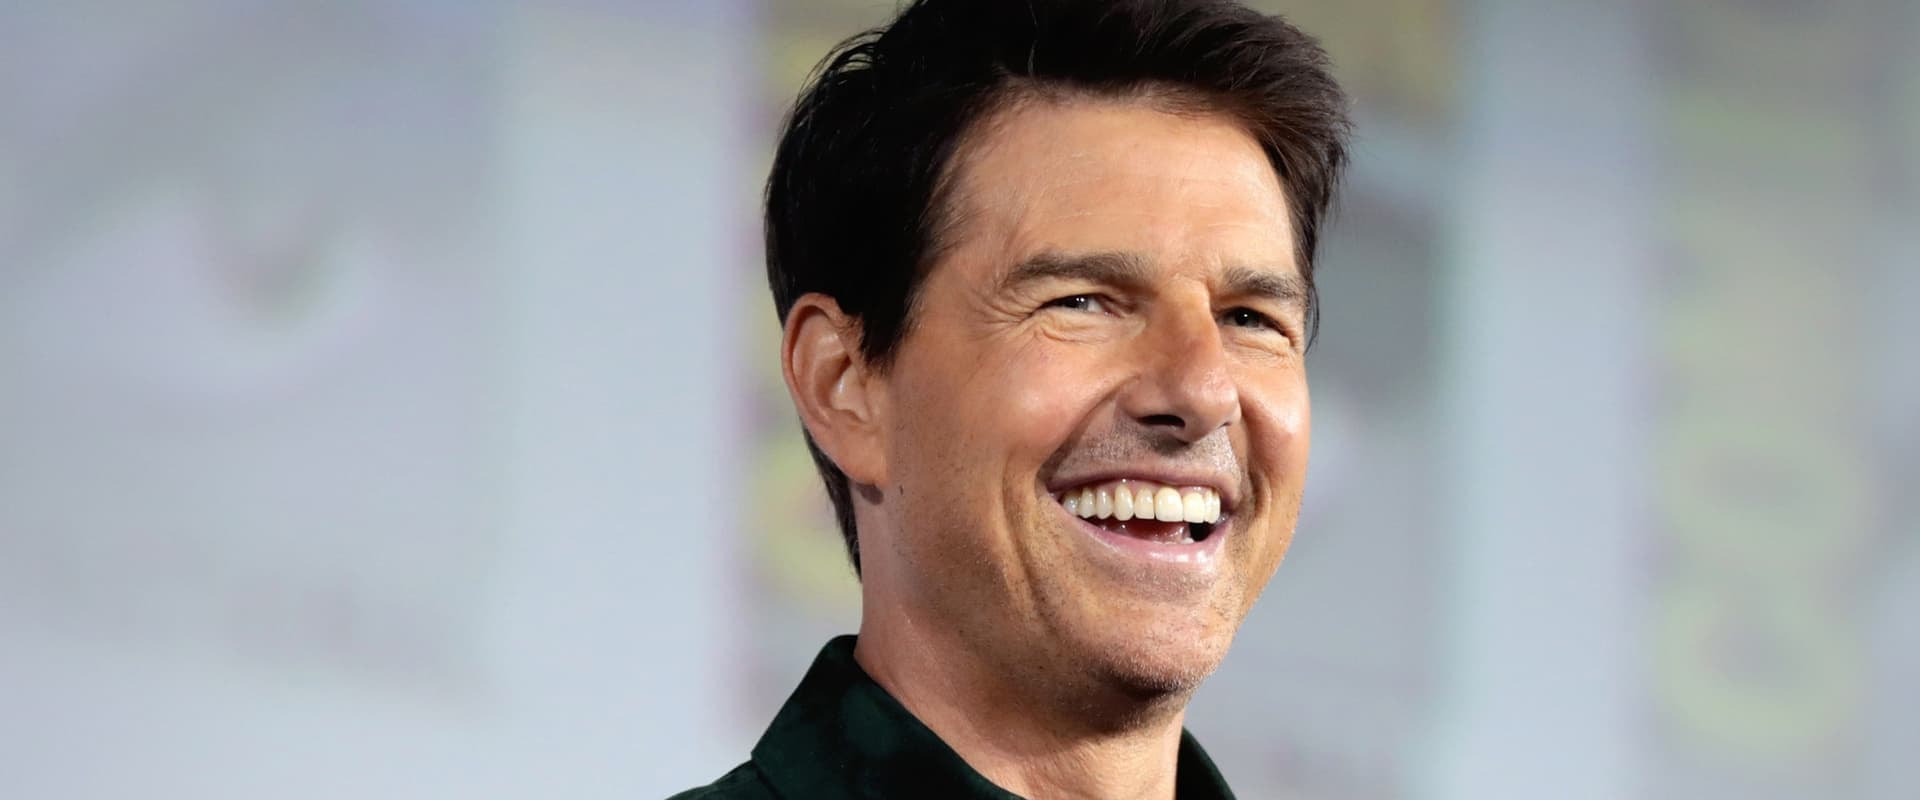 Tom Cruise: An Eternal Youth